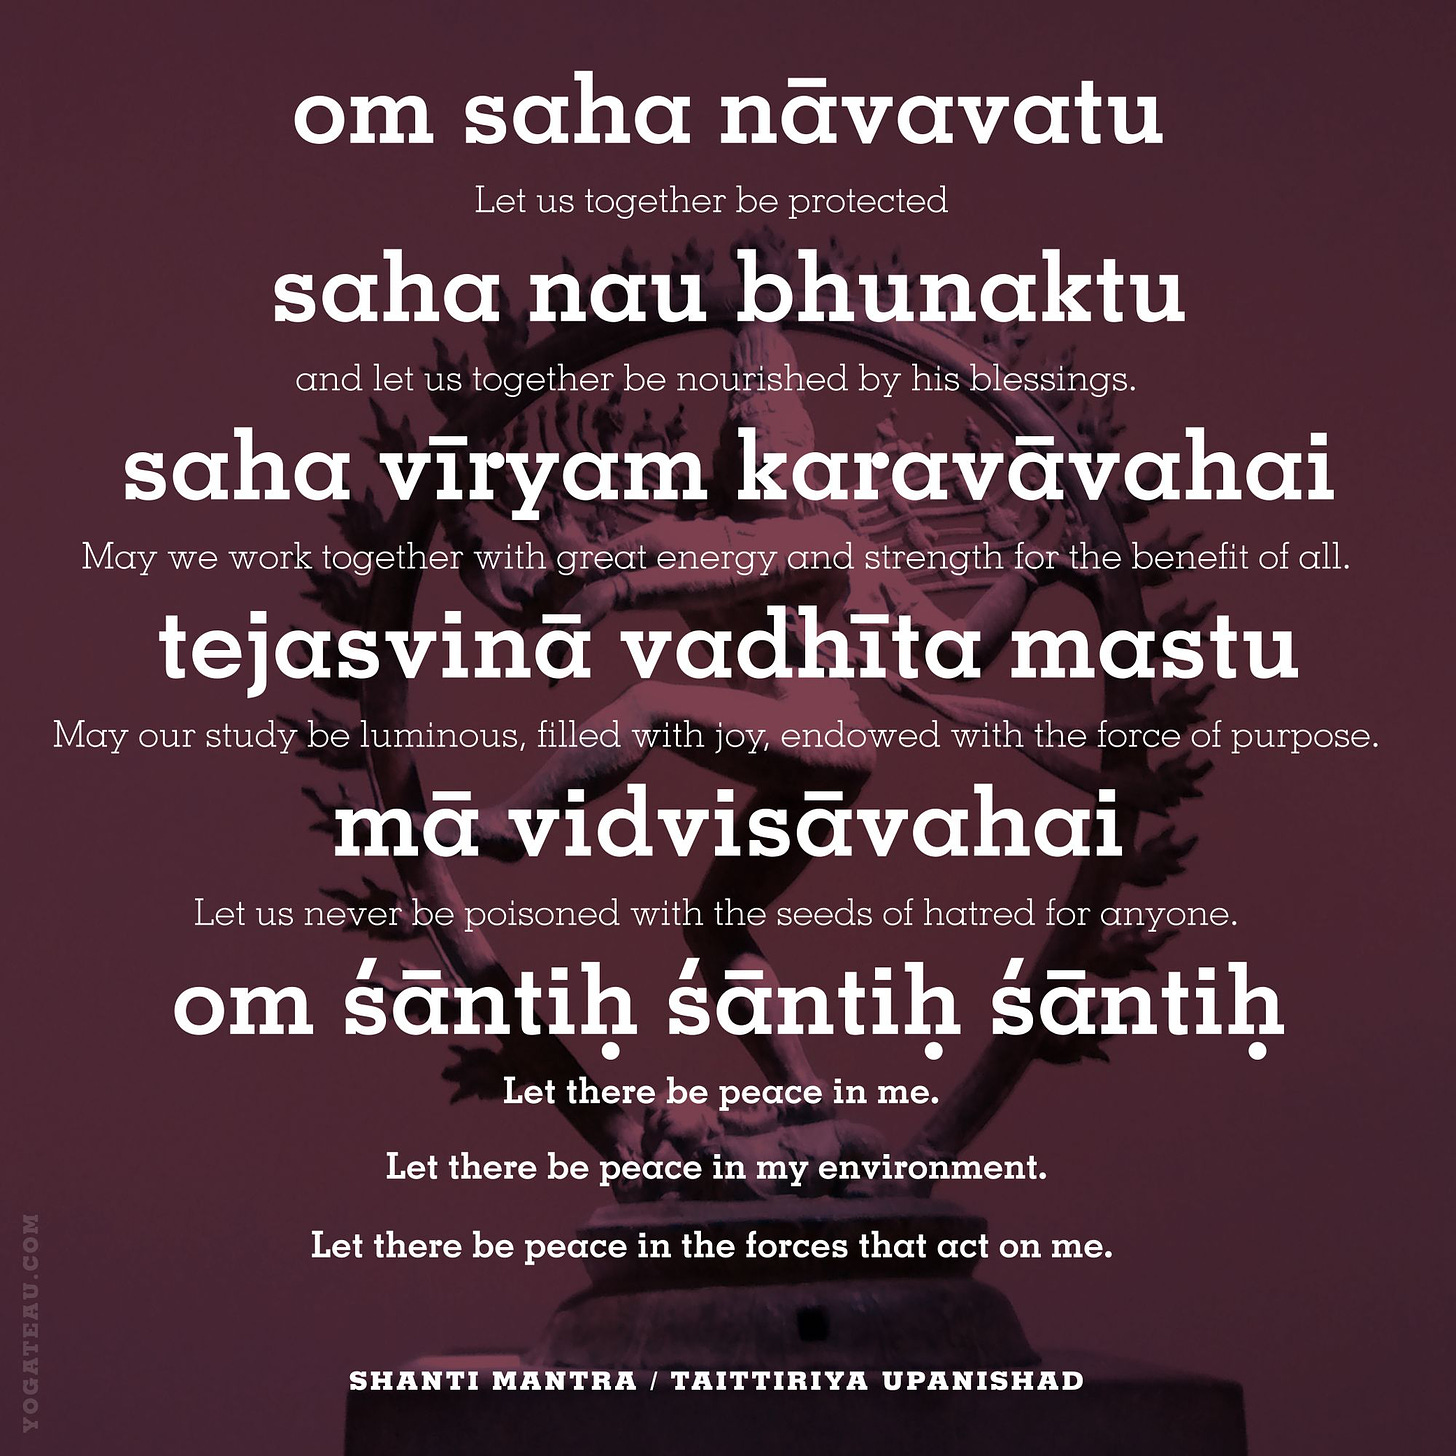 Shanti mantra Om Saha Navavatu meaning and interpretation from the Upanishads, yoga text